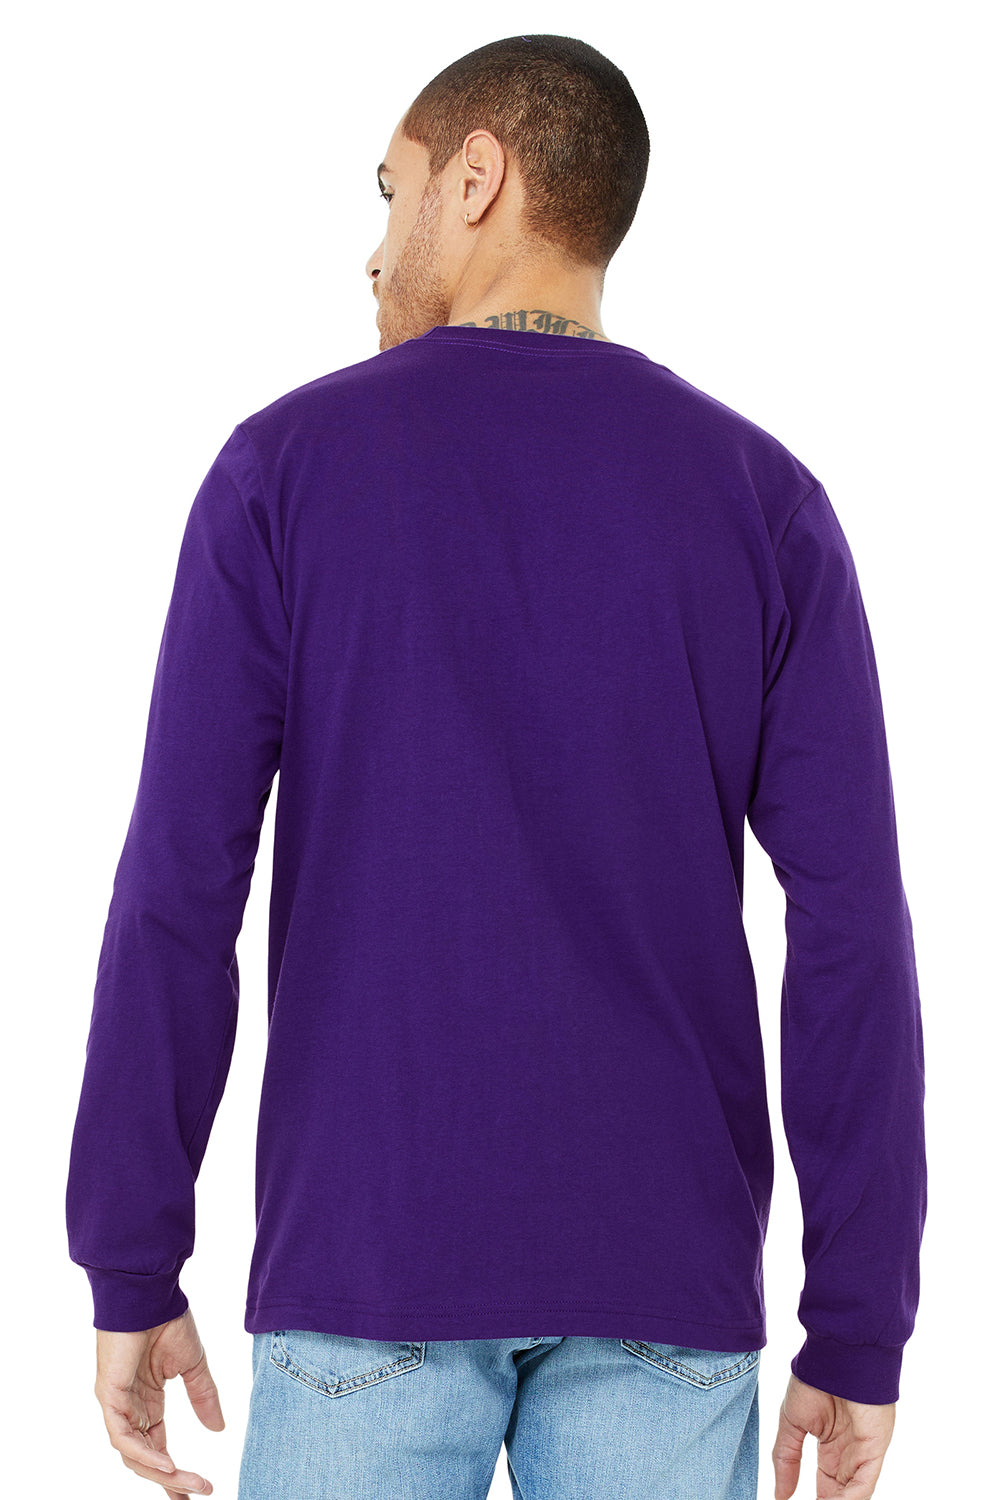 Bella + Canvas BC3501/3501 Mens Jersey Long Sleeve Crewneck T-Shirt Team Purple Model Back